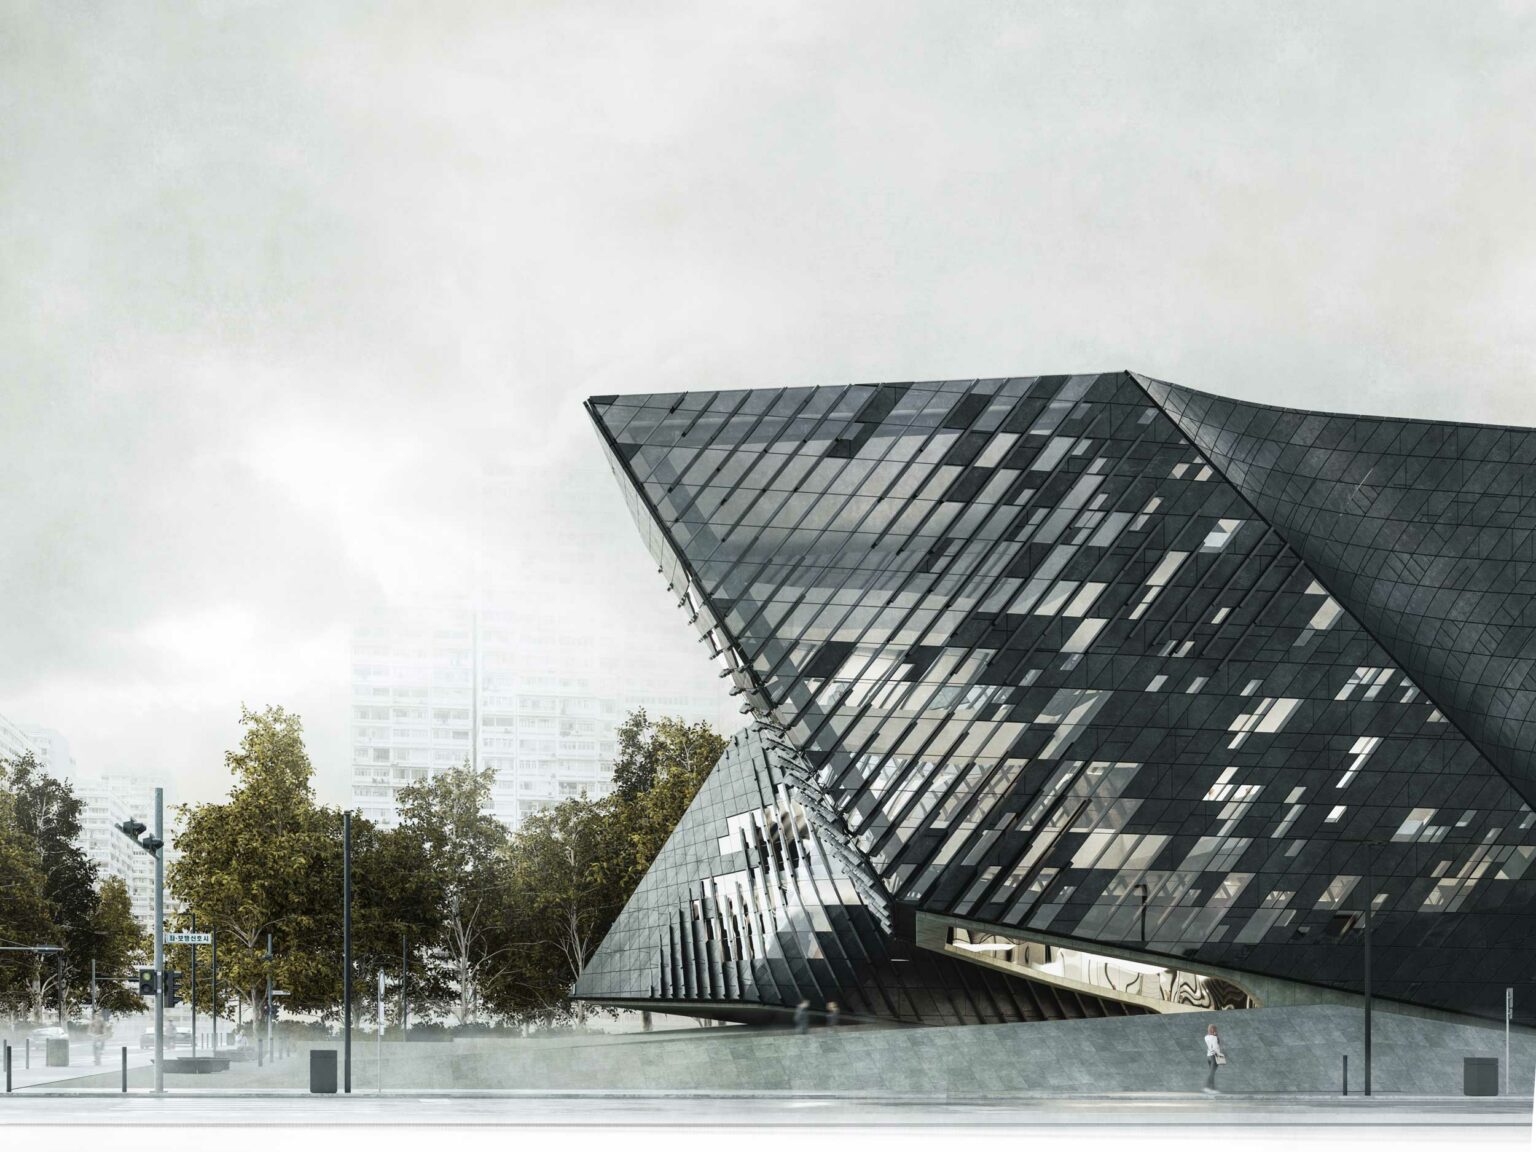 Seoul Photographic Art Museum Design Concept proposal